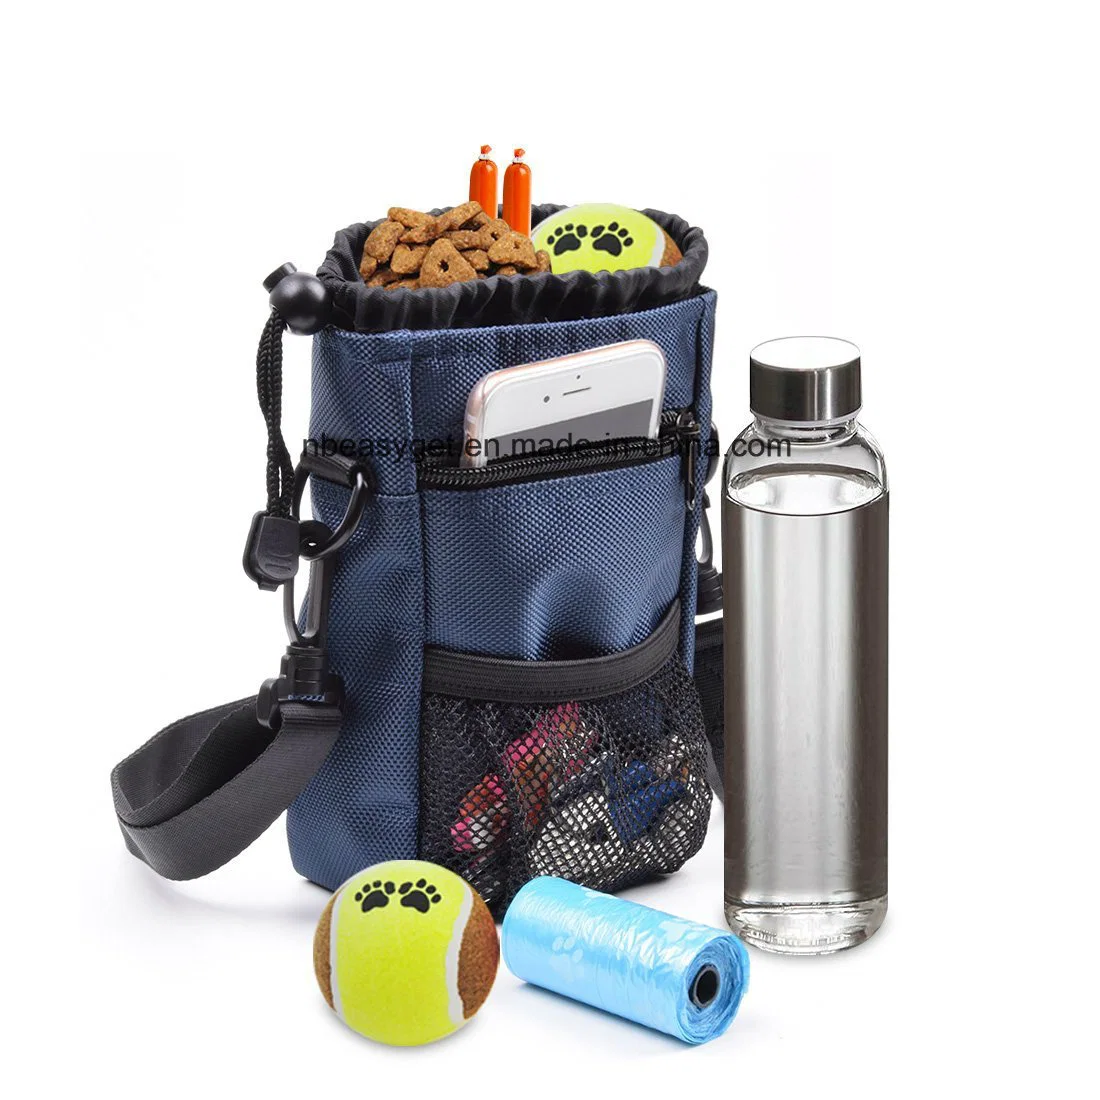 Multi-Functional Portable Pet Dog Treat Training Bag + Free Poop Bag, Built-in Pouch Poop Bag Dispenser, Easily Carries Pet Toy Treats Adjustable Esg10229